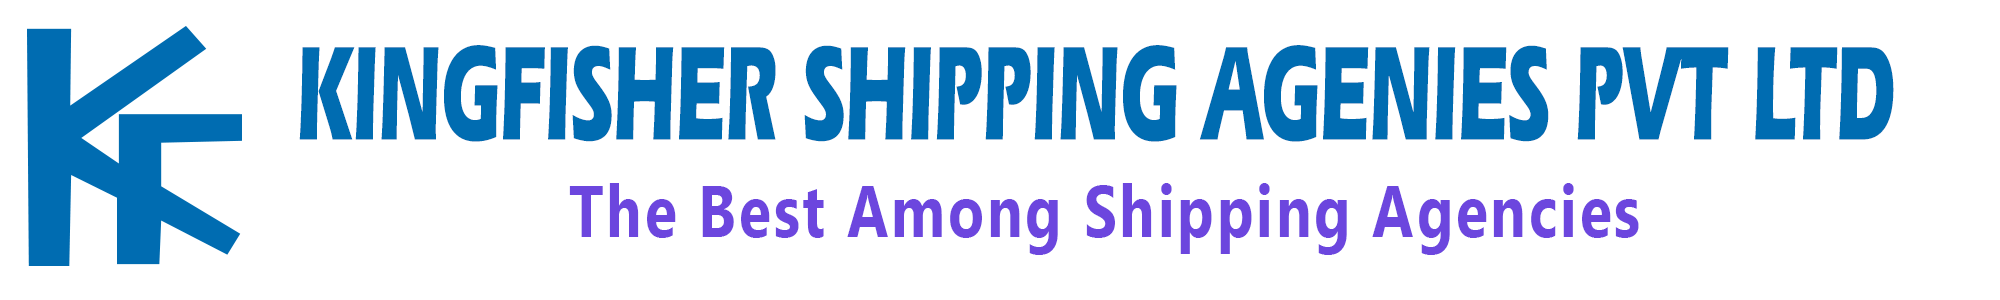 Kingfisher Shipping Agencies